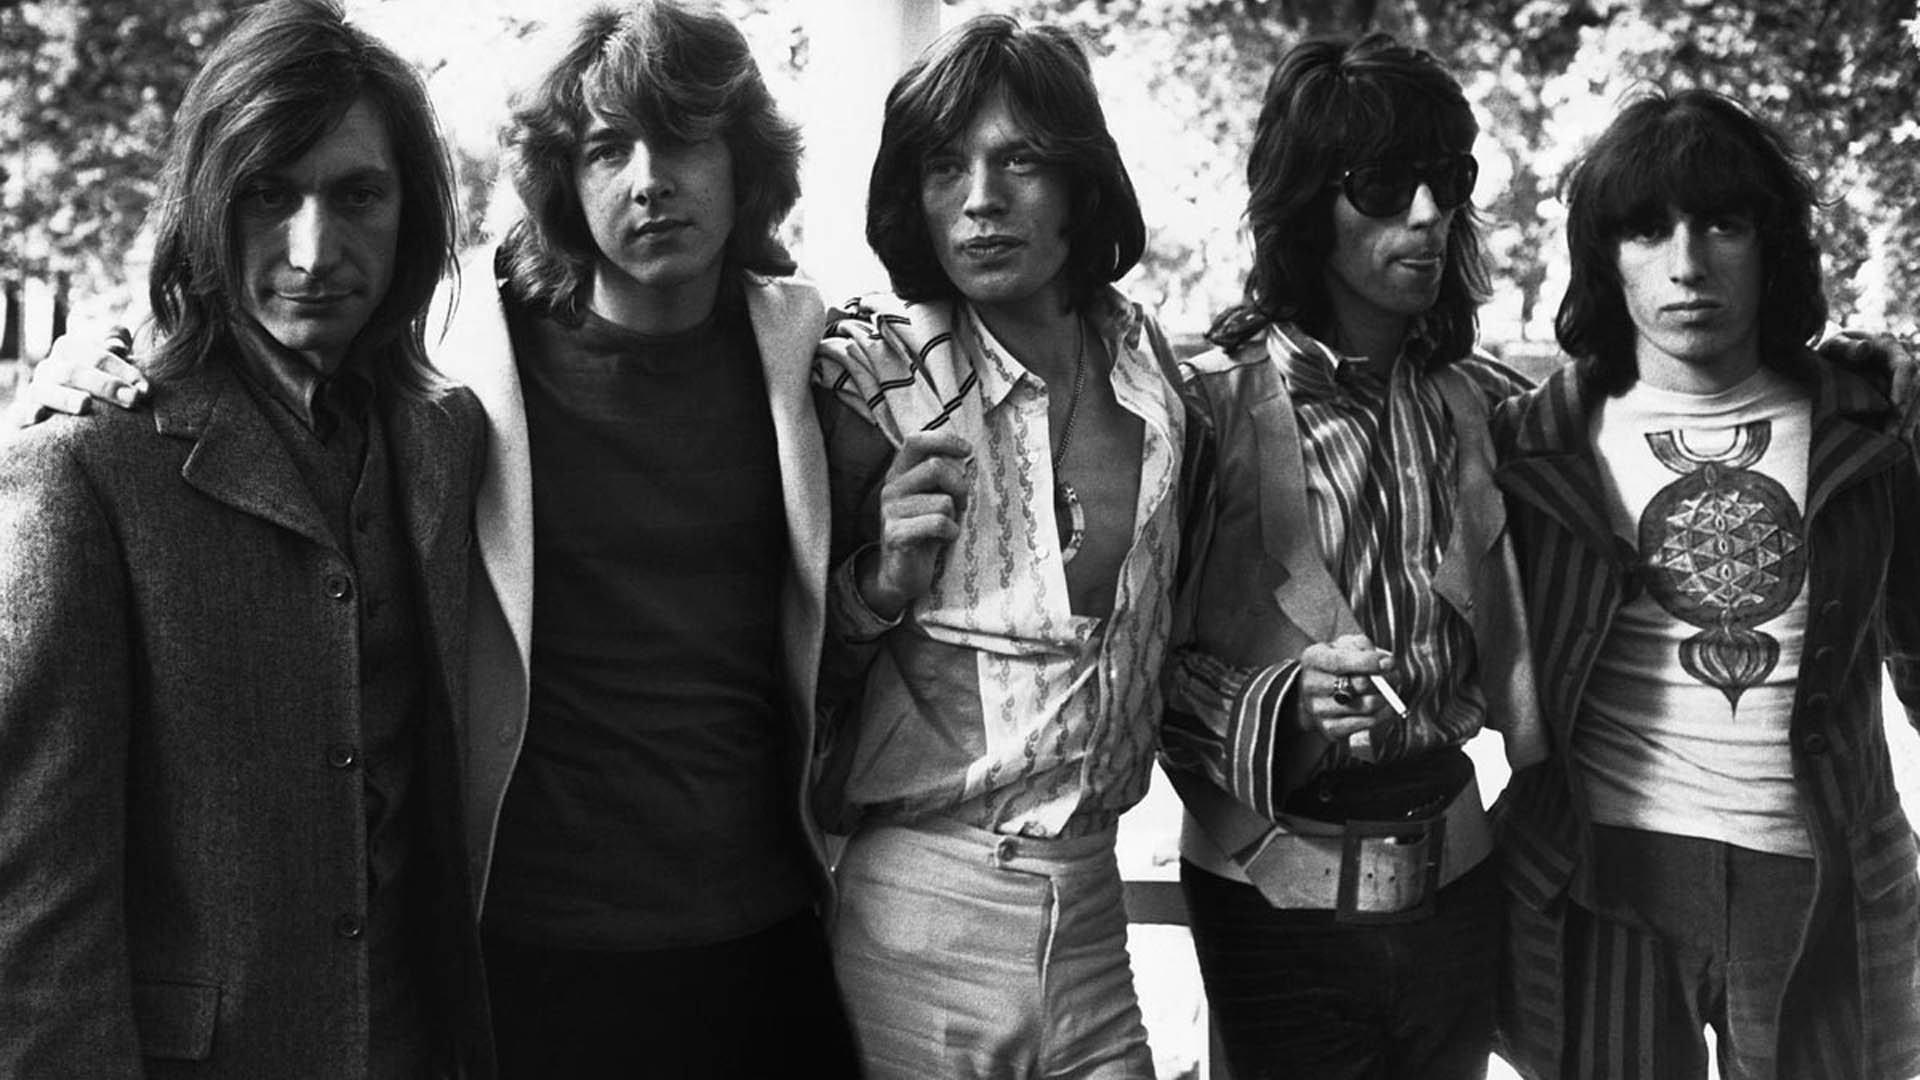 People 1920x1080 men musician rockstar singer Rolling Stones Mick Jagger Keith Richards monochrome legends long hair Group of Men music